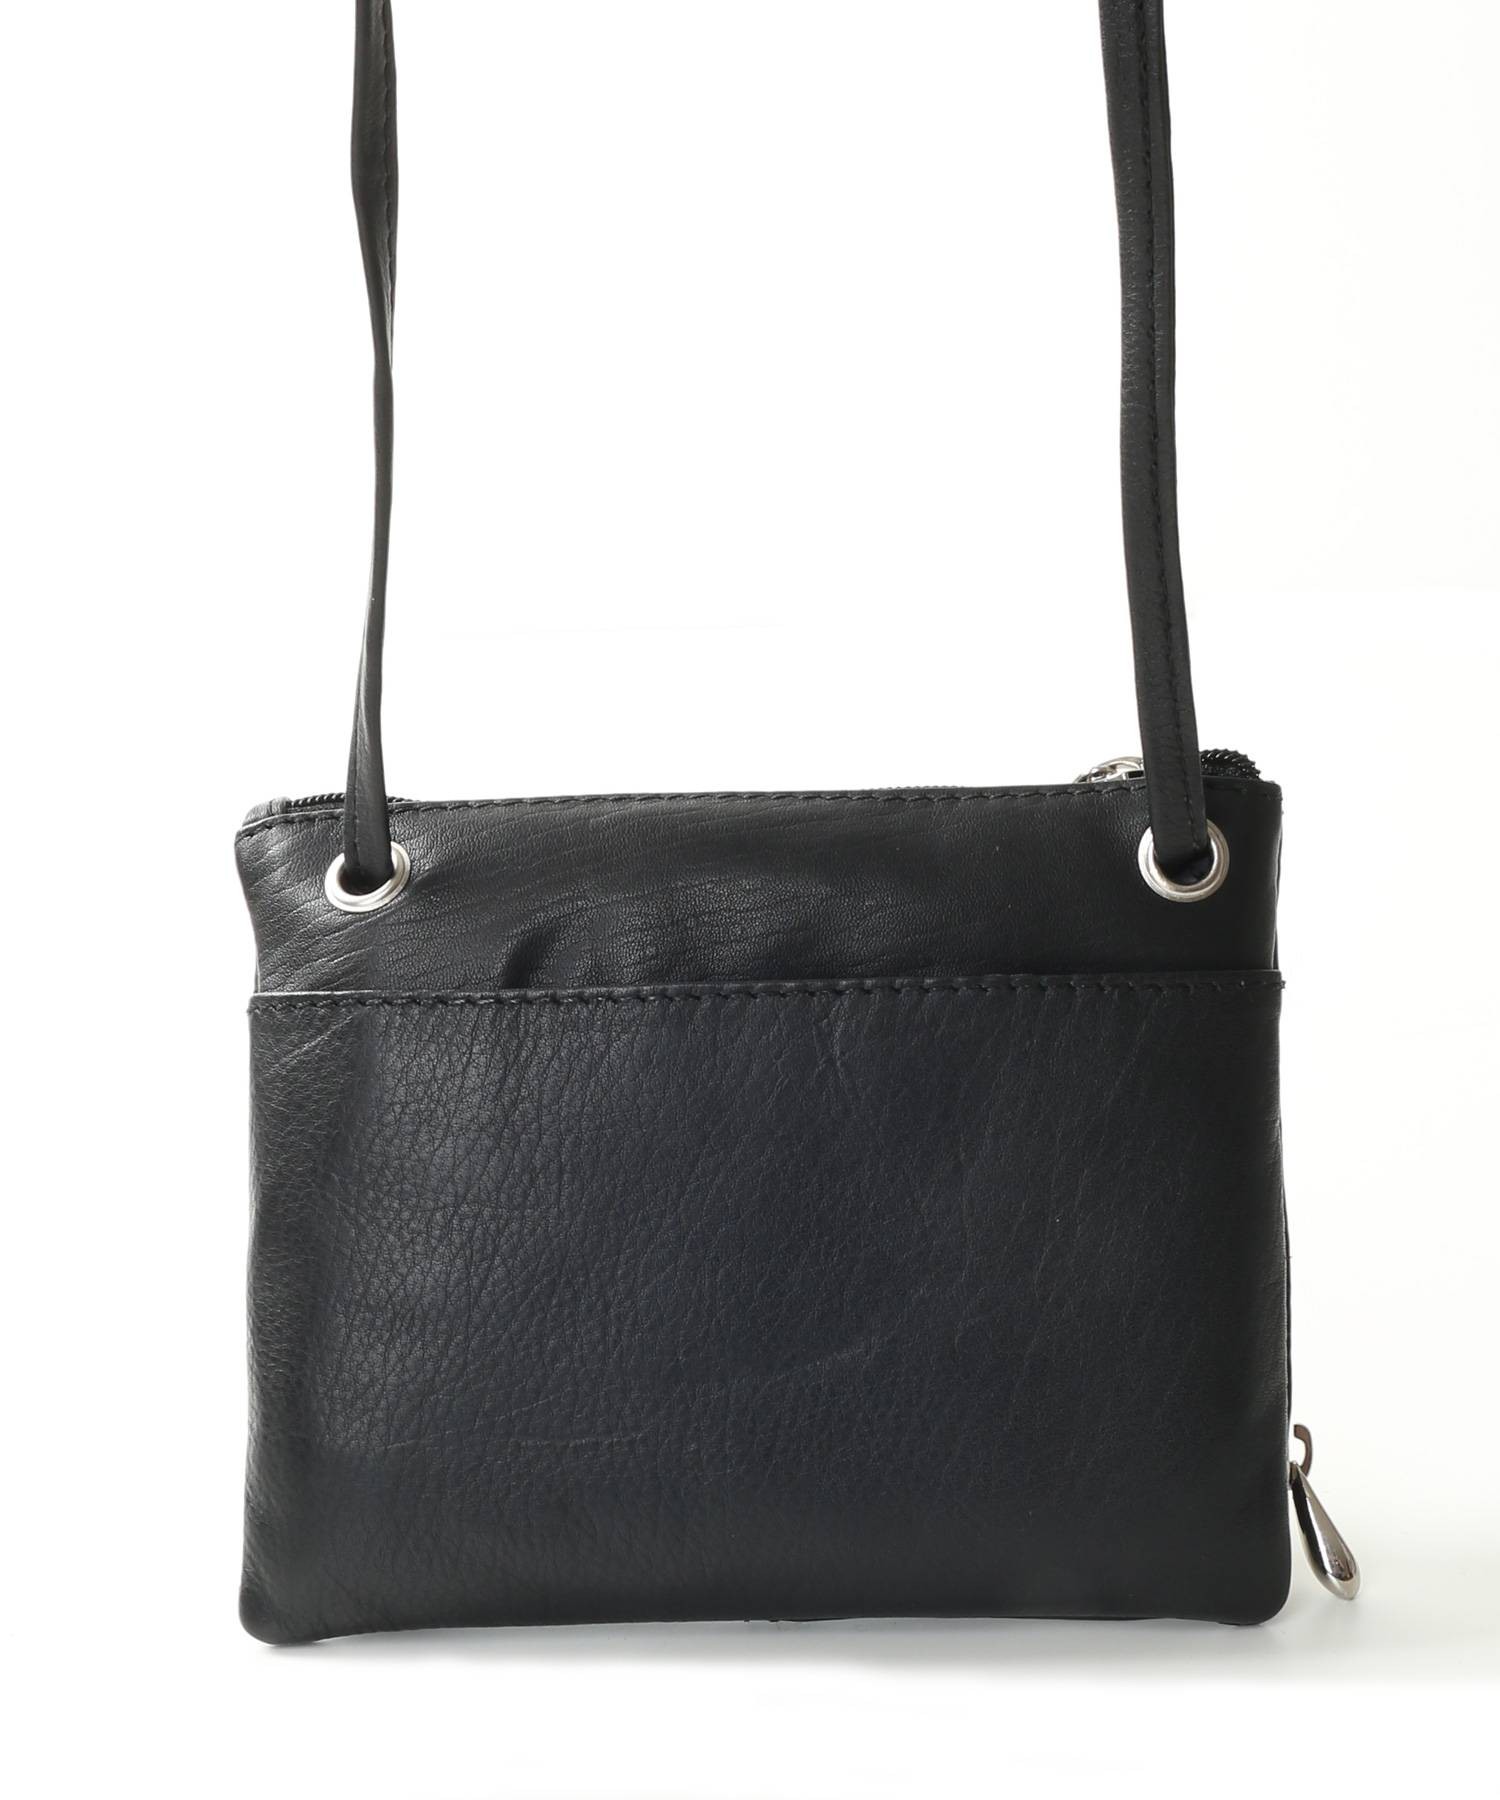 Nova 936 Real Leather Cross Body Handbag Black in Nova Leather Handbags ...